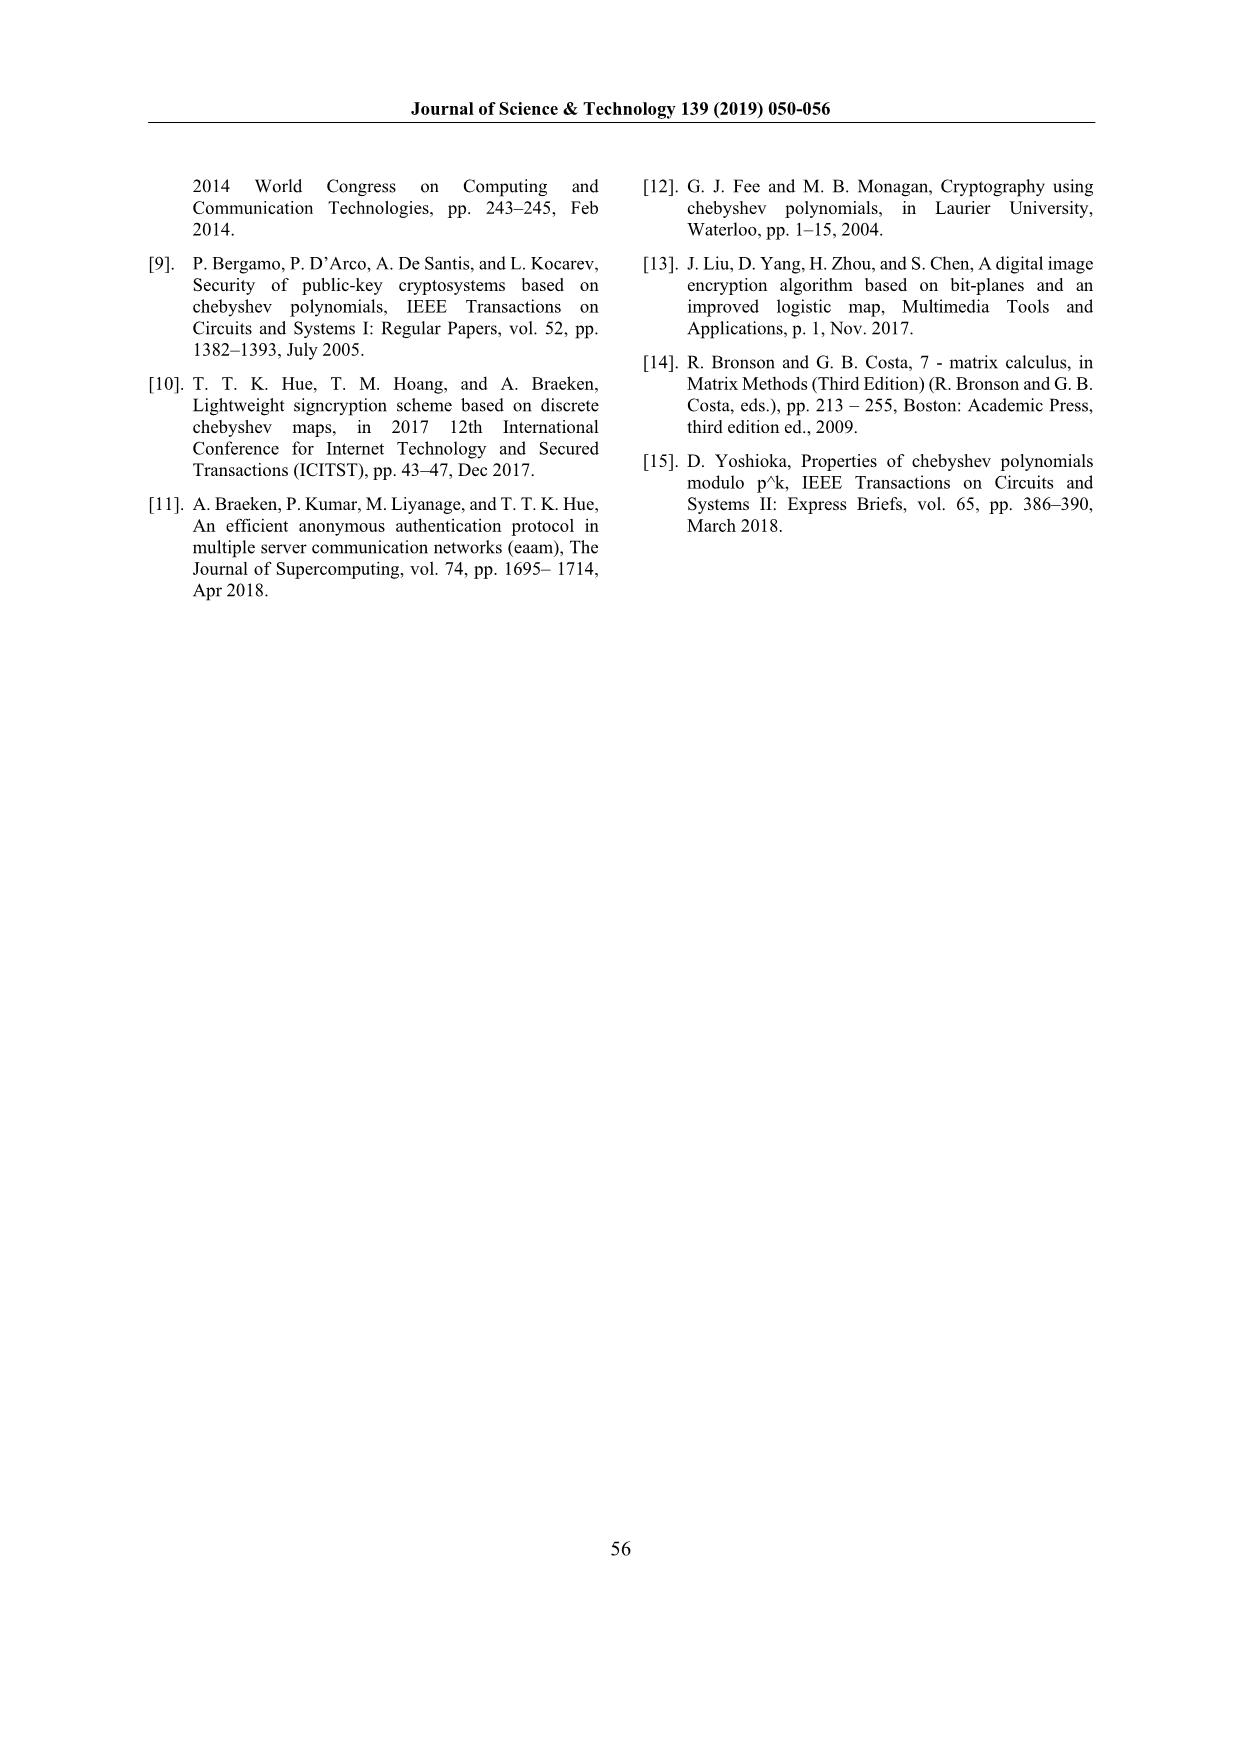 Hybrid - Key agreement protocol based on chebyshev polynomials trang 7